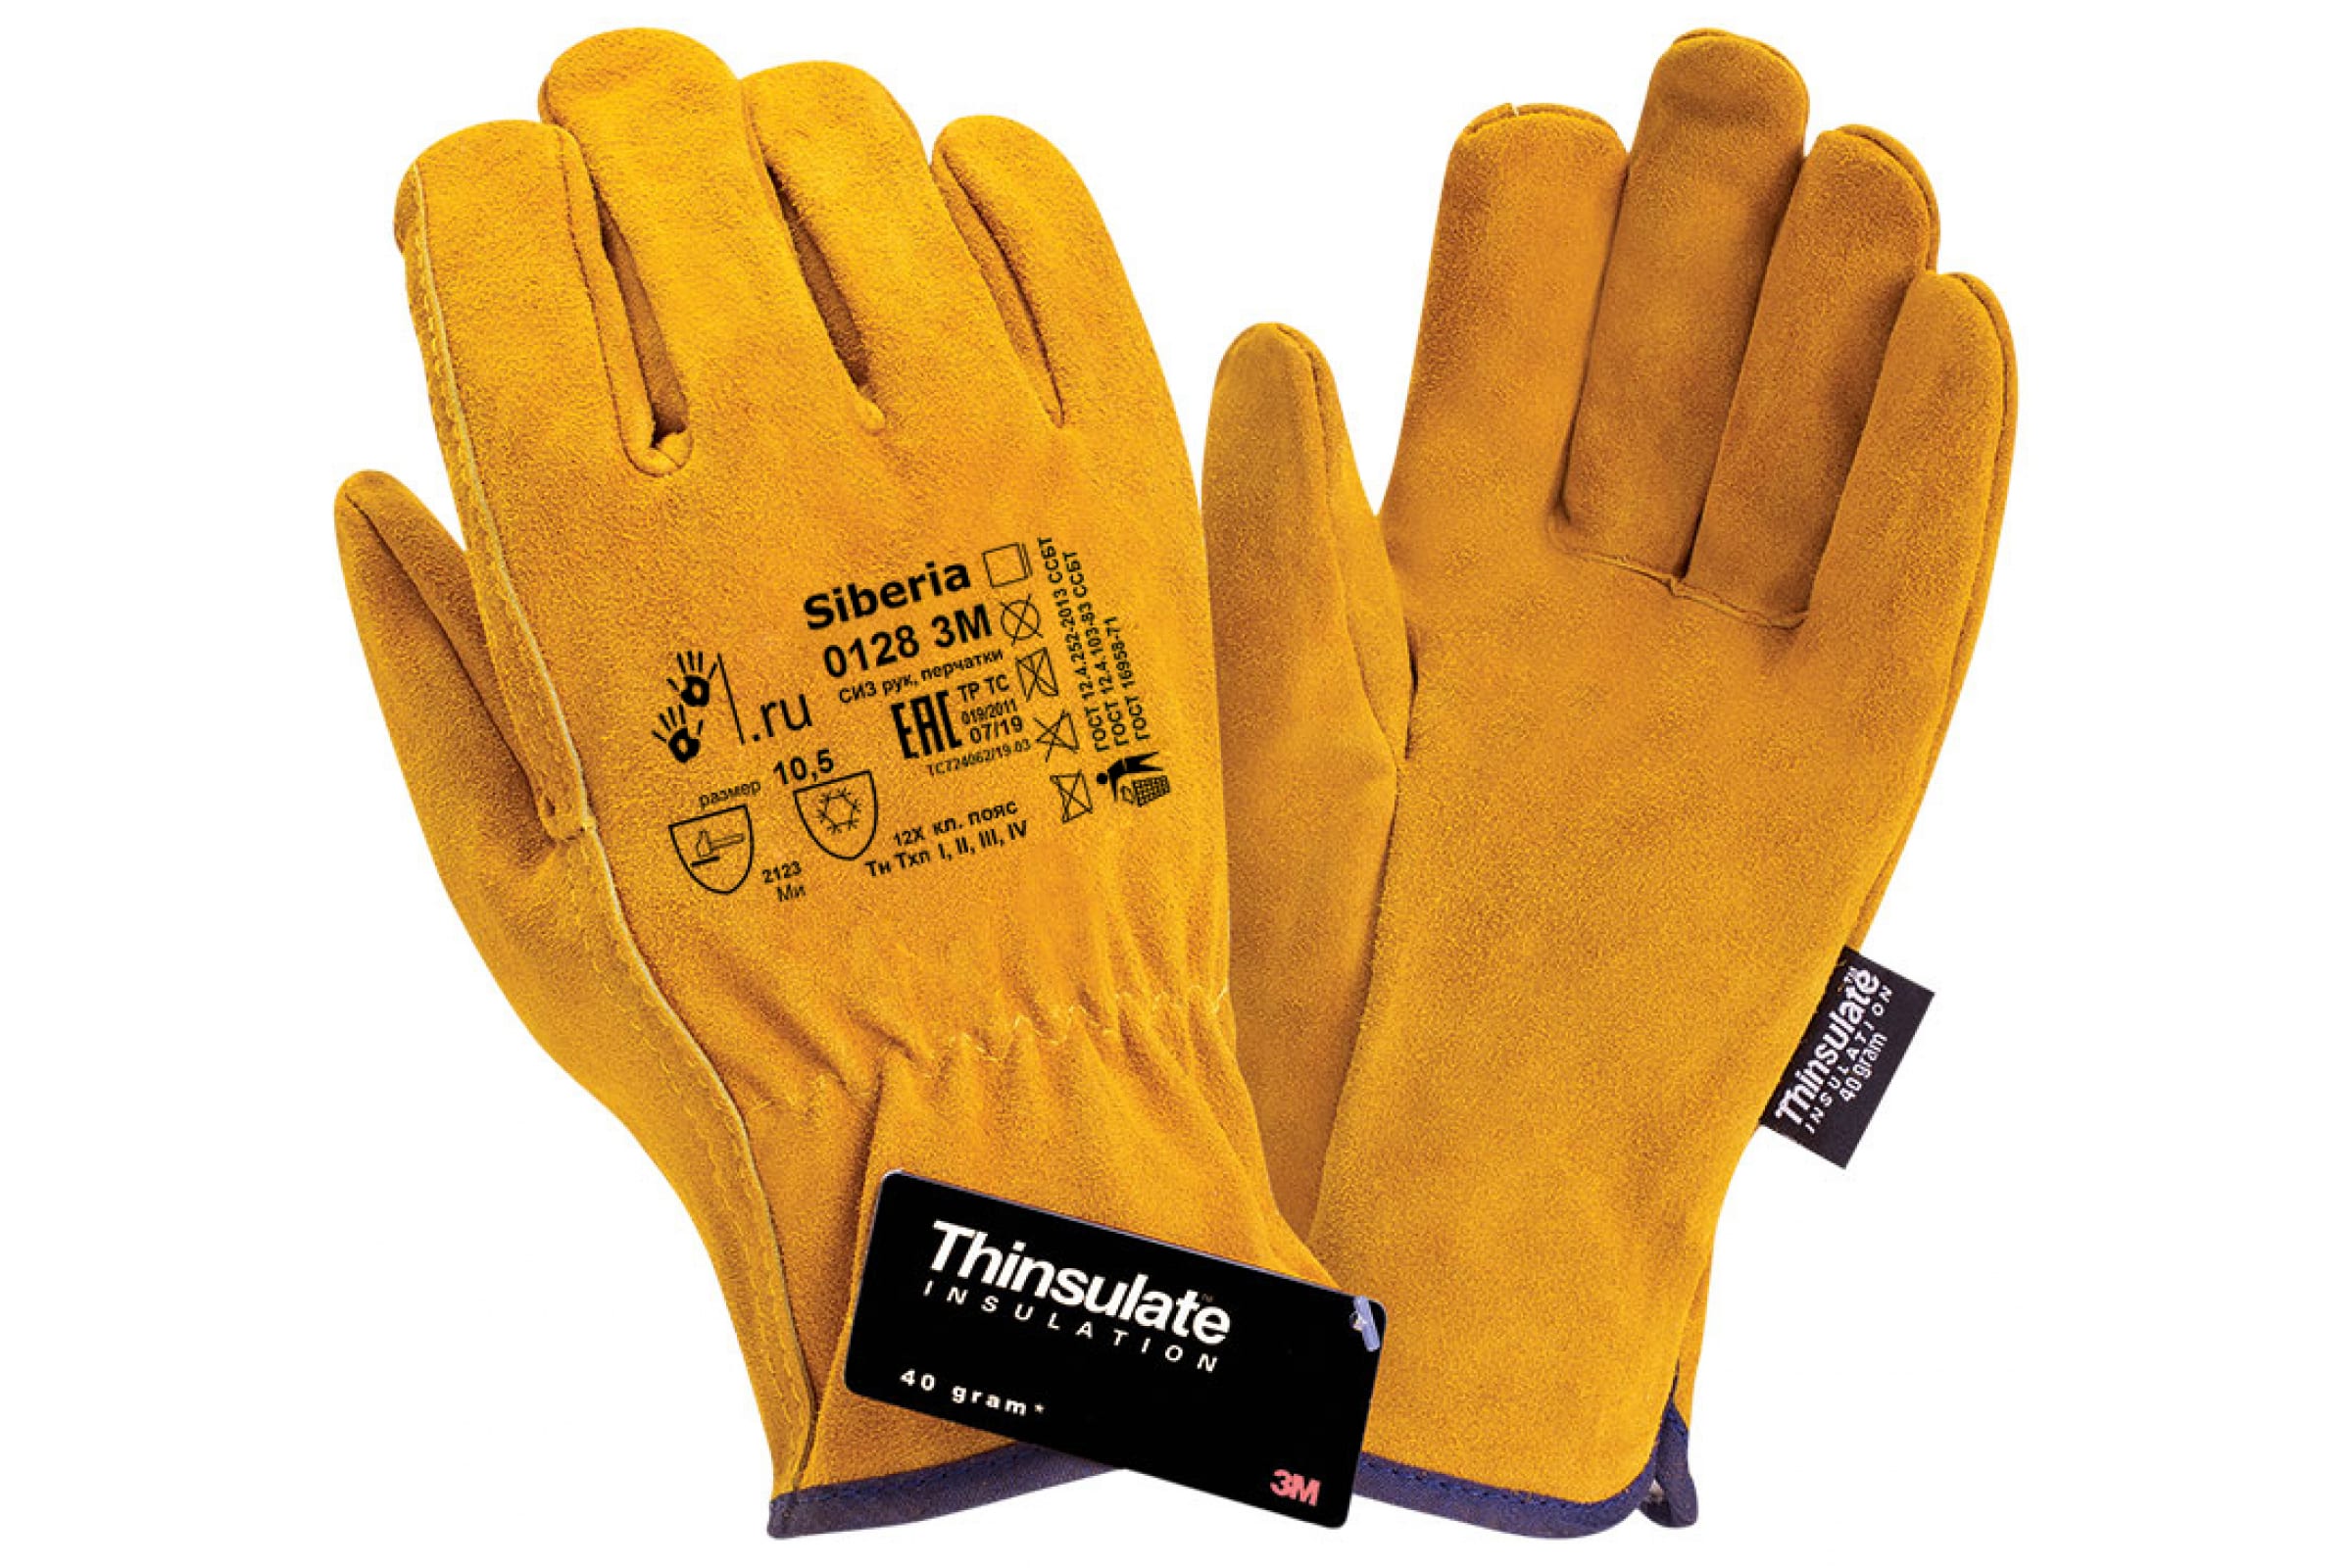 2Hands Перчатки утепленные, спилок КРС/Thinsulate 3М 0128 3M Siberia утепленные перчатки 2hands